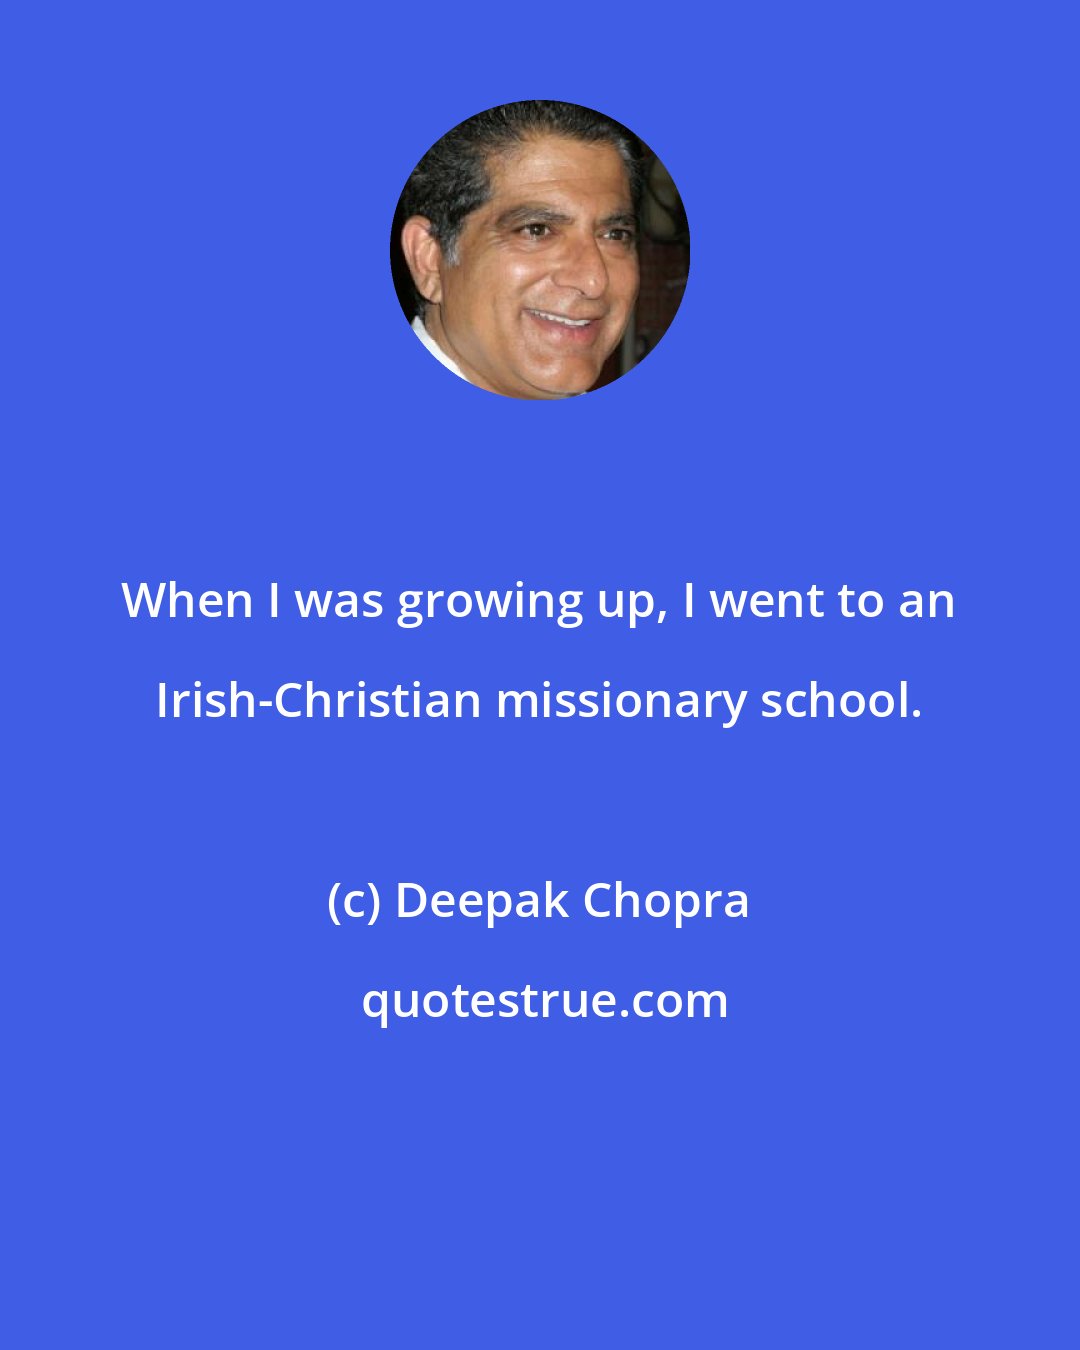 Deepak Chopra: When I was growing up, I went to an Irish-Christian missionary school.